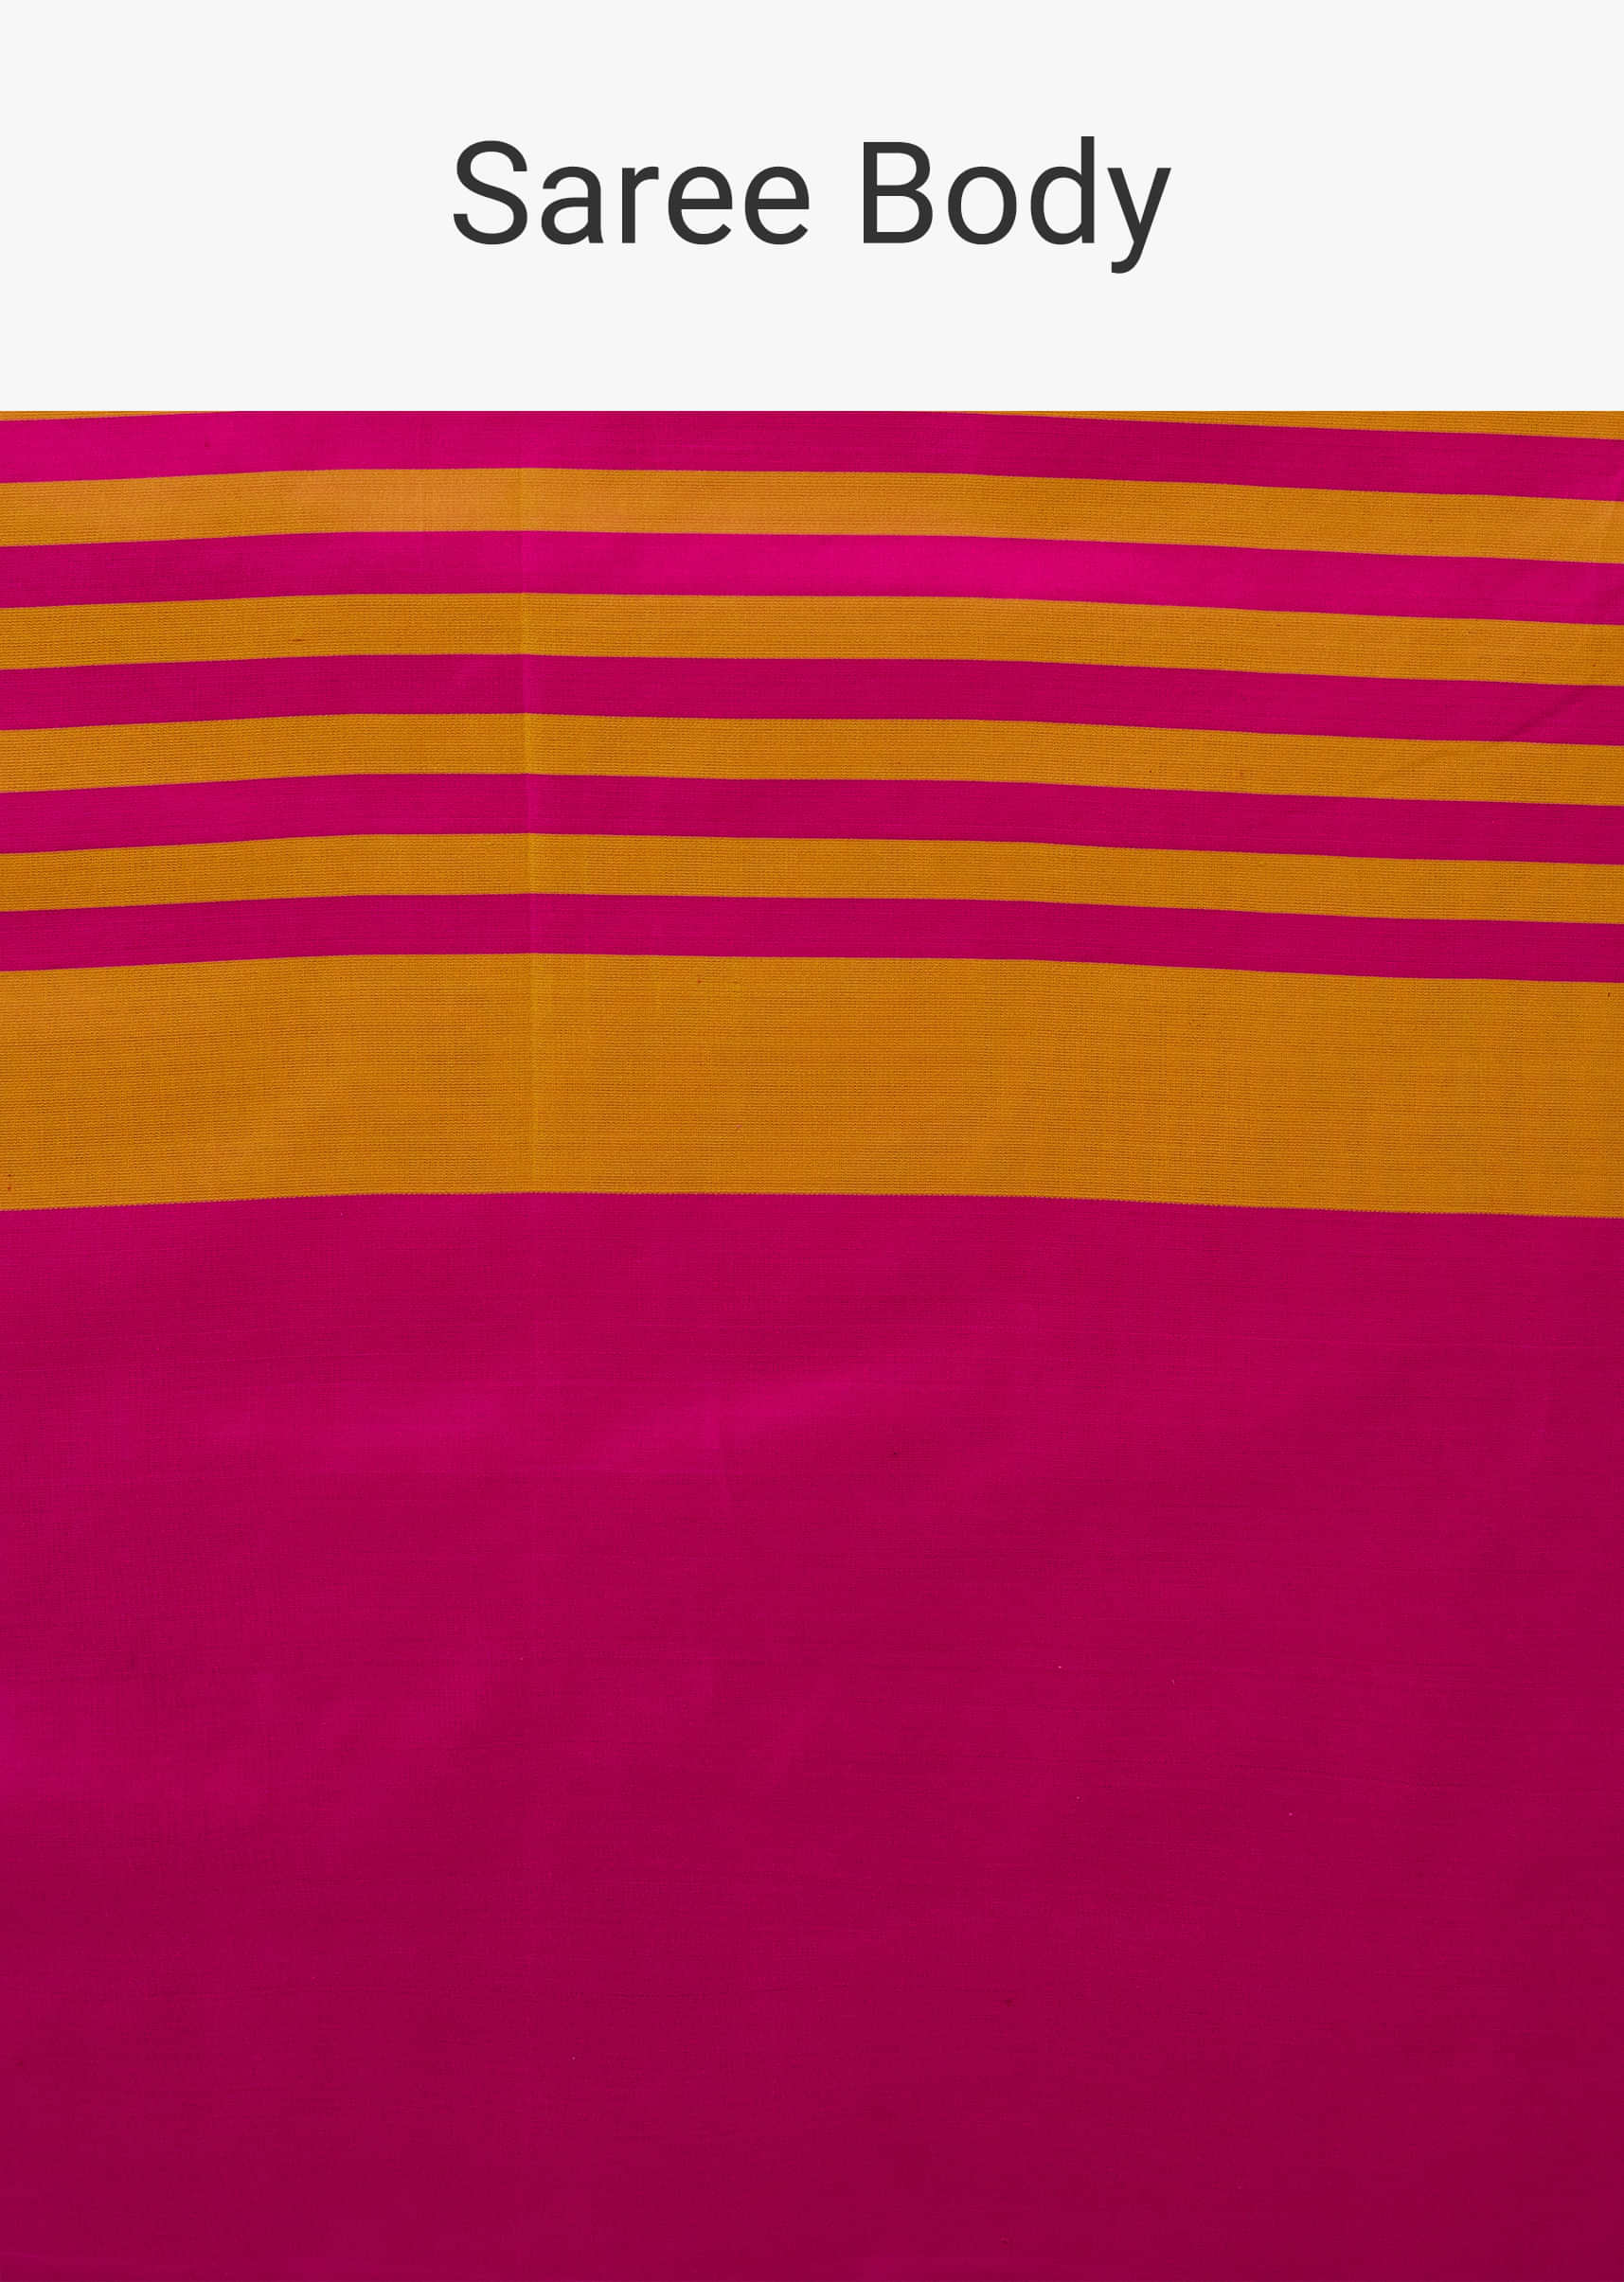 Hot Pink Satin Printed Saree With Dual Tone Stripes